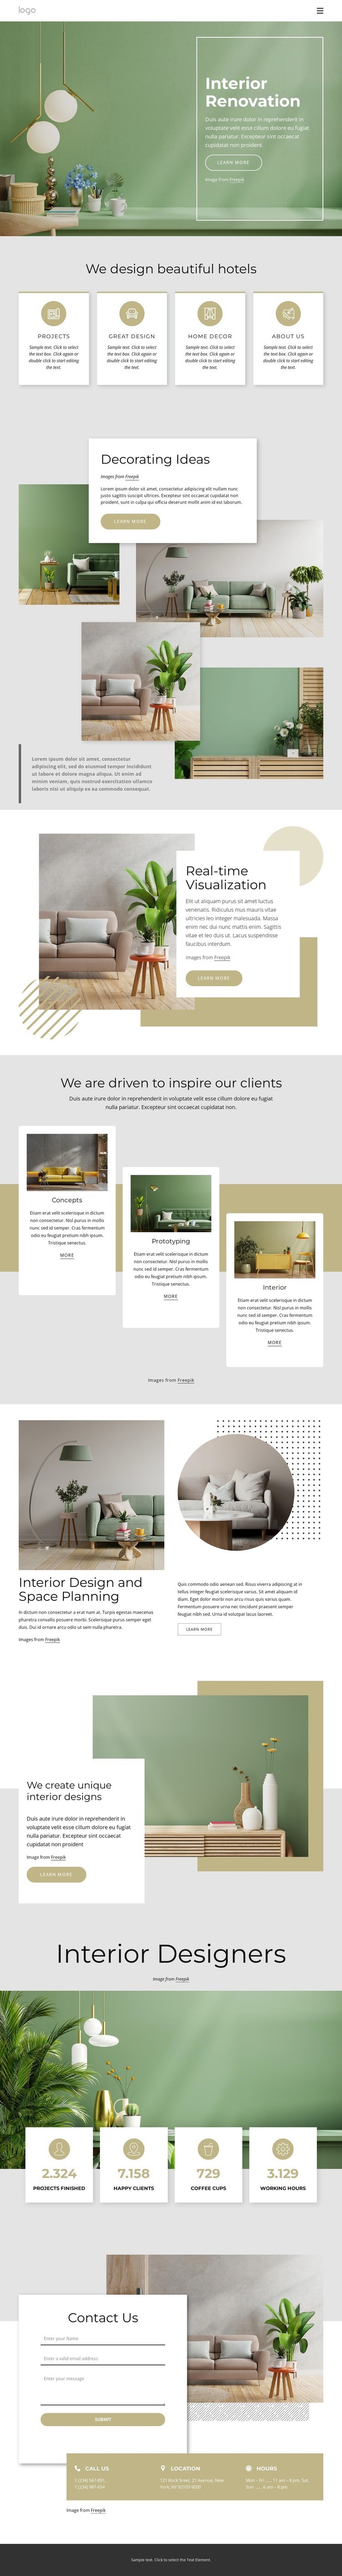 Architecture and interior design agency Homepage Design